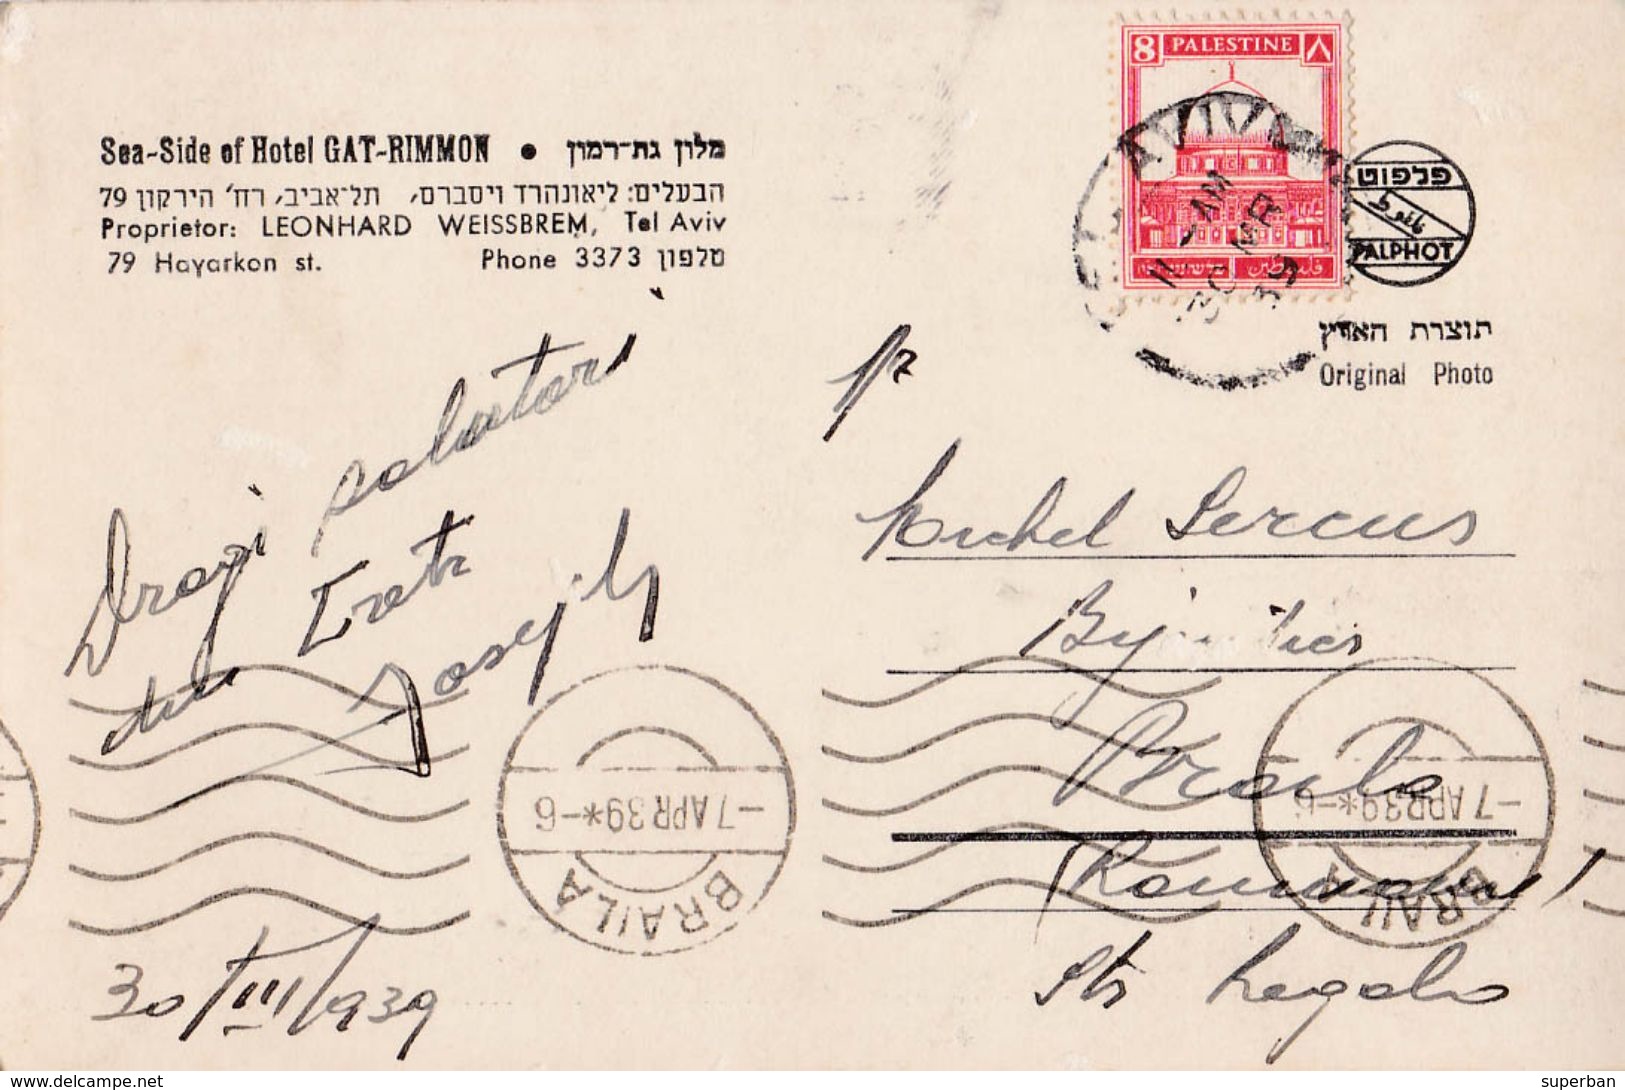 PALESTINE / ISRAEL : TEL AVIV : HOTEL GAT-RIMMON - CARTE VRAIE PHOTO / REAL PHOTO ~ 1935 - '39 - RARE !!! (w-483) - Israele